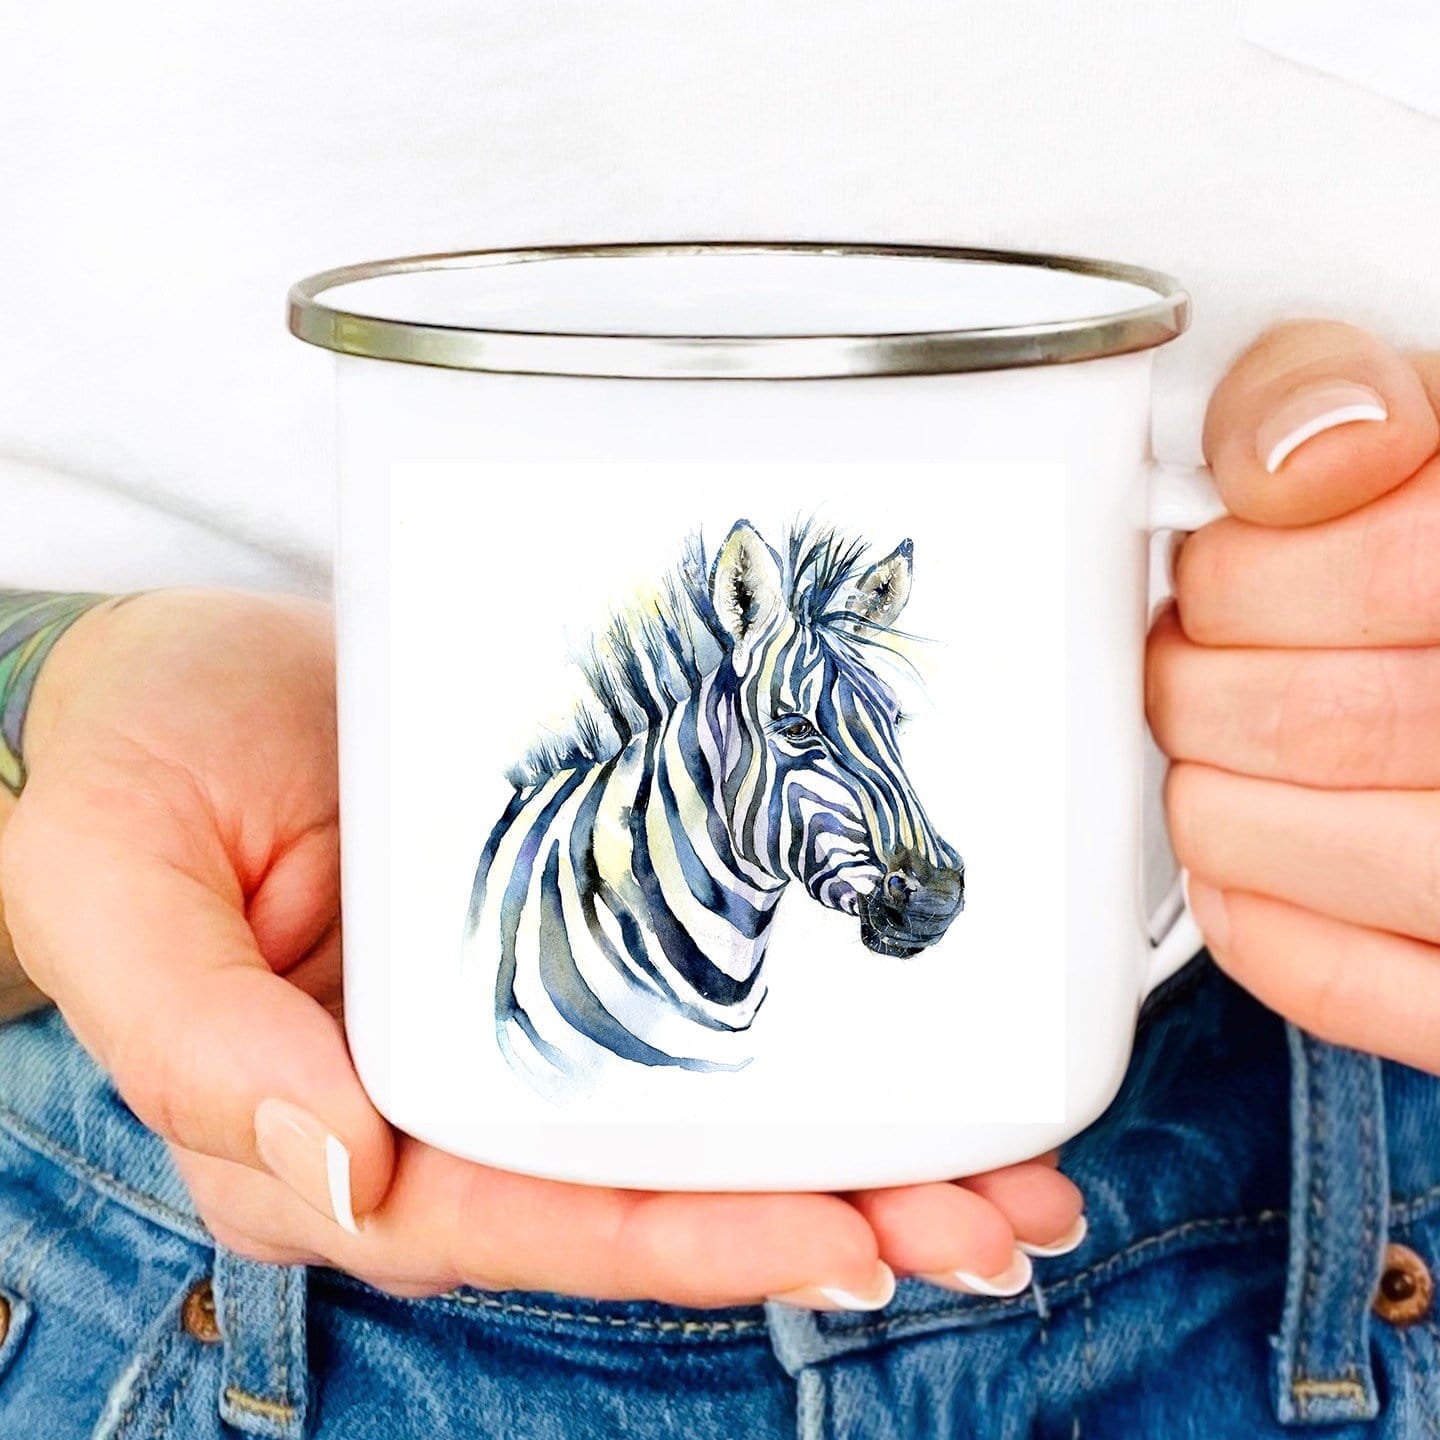 Zebra Enamel Mug designed by artist Sheila Gill
